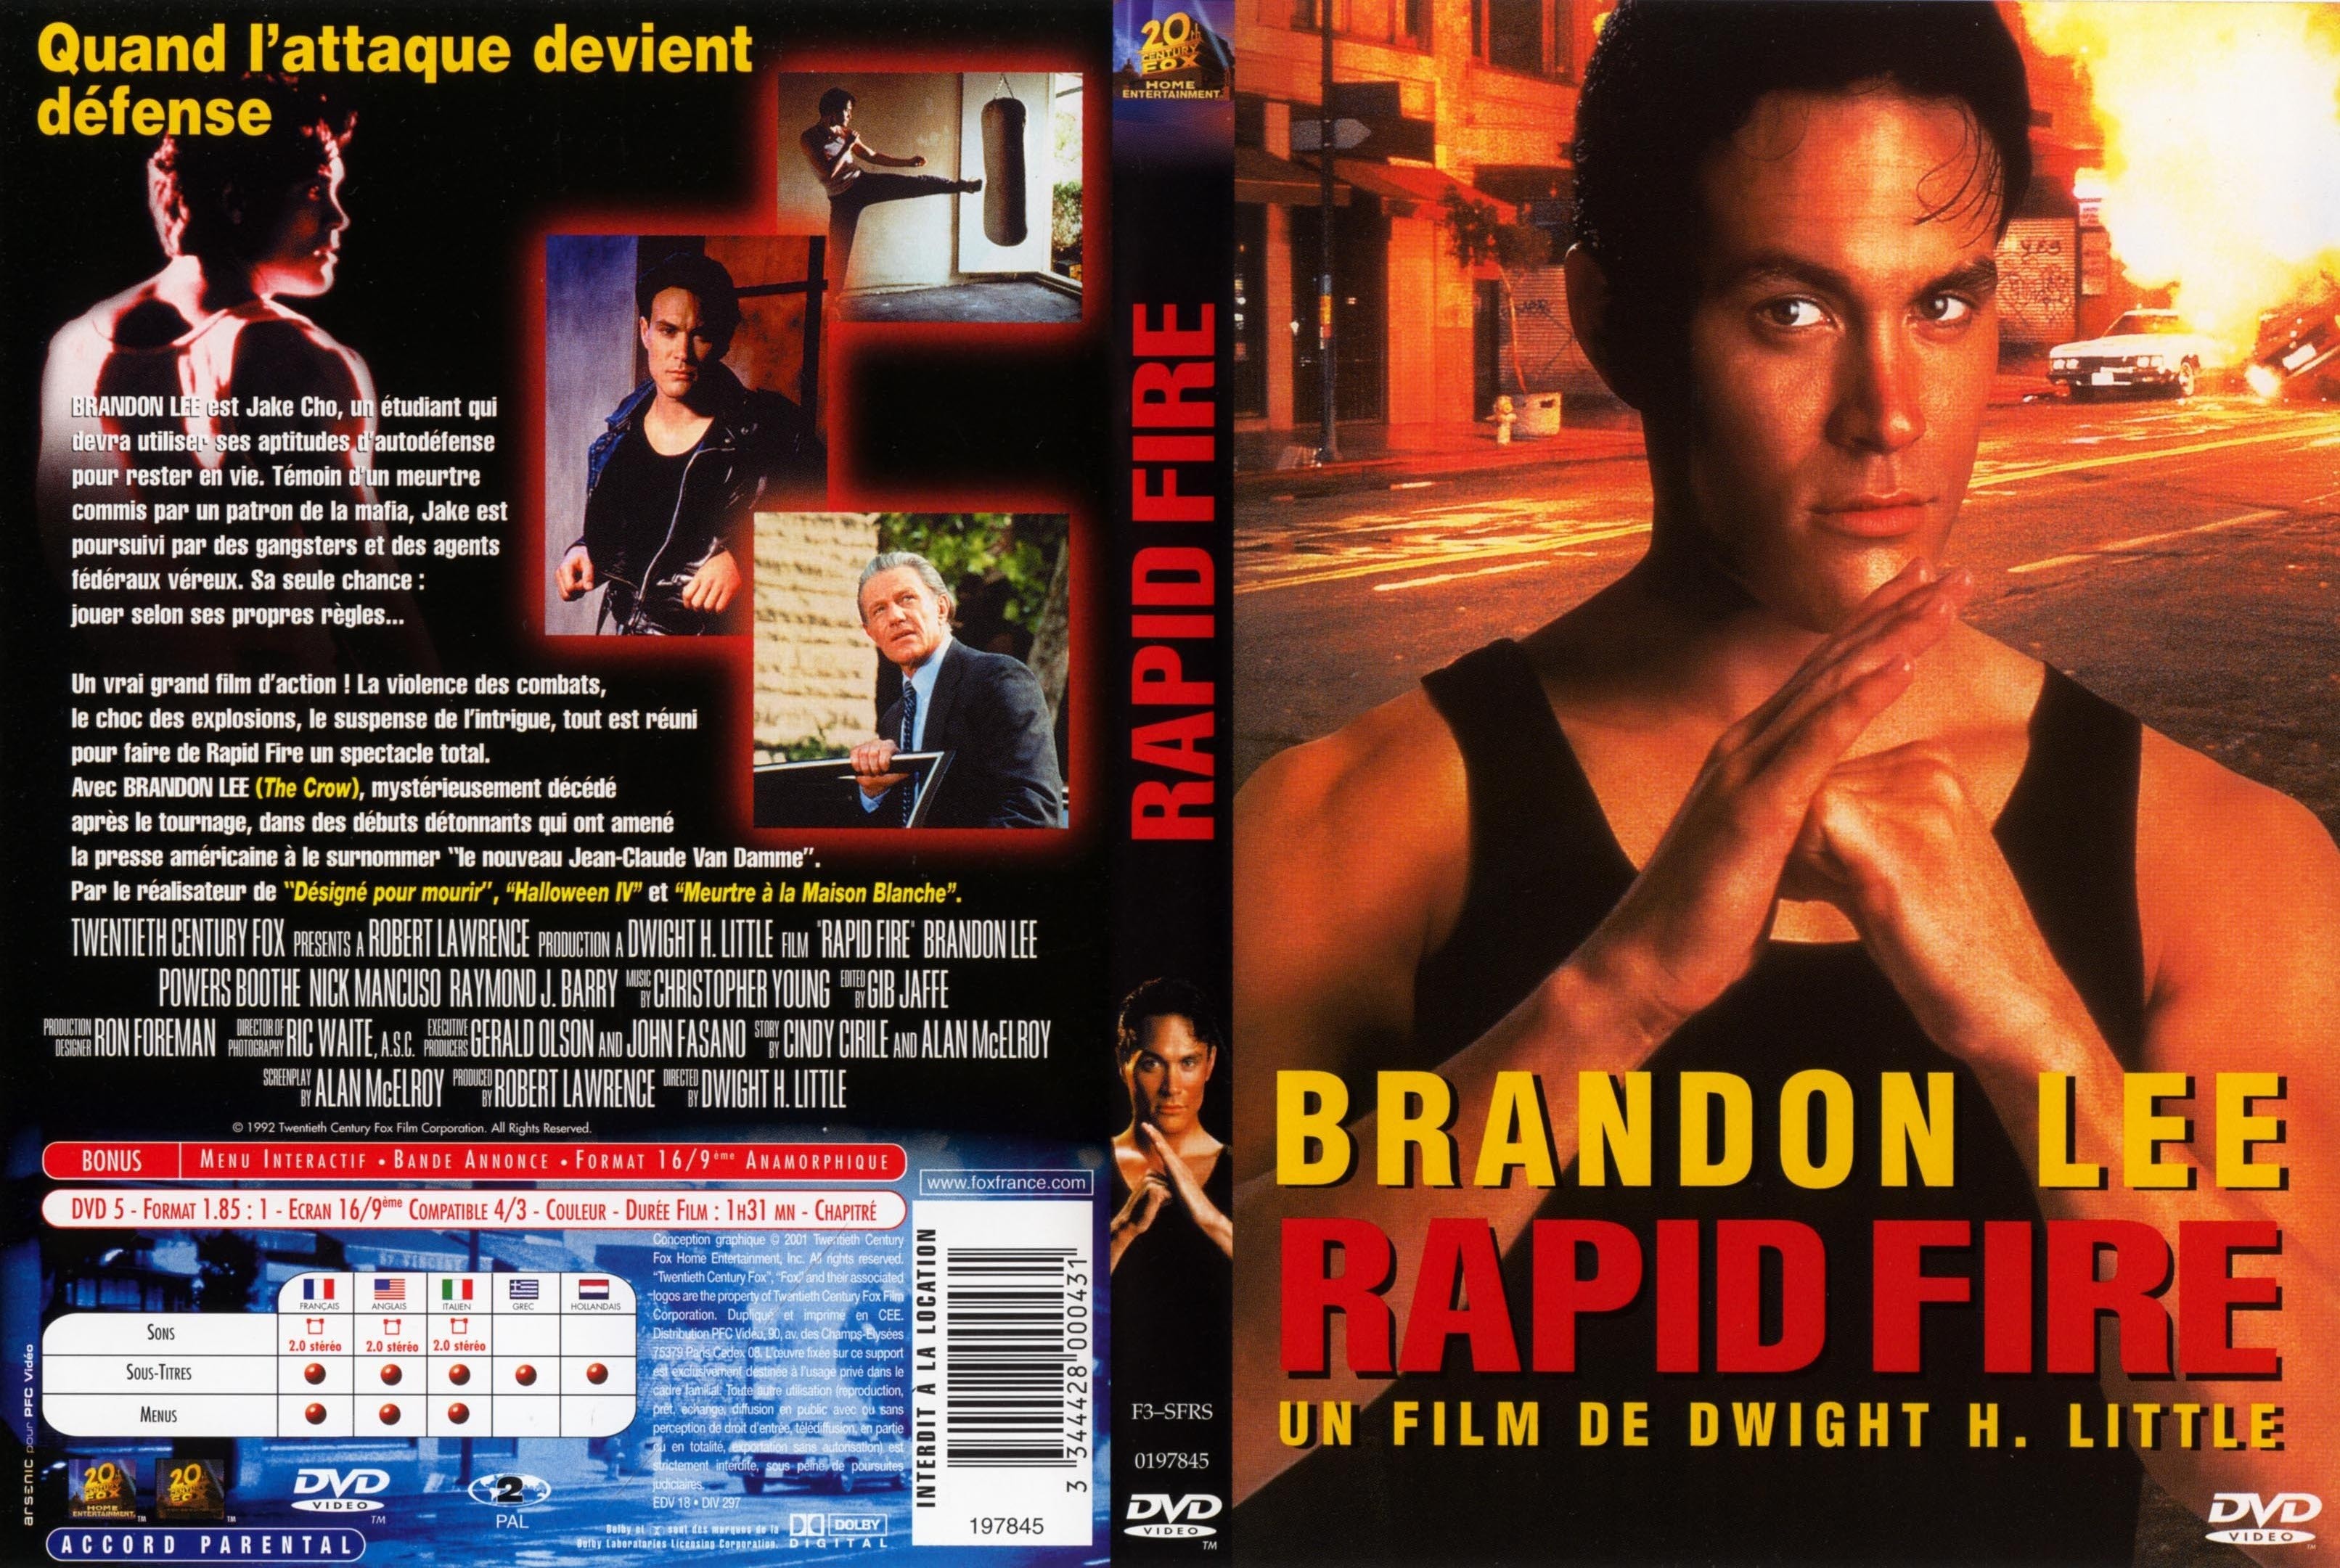 Jaquette DVD Rapid fire